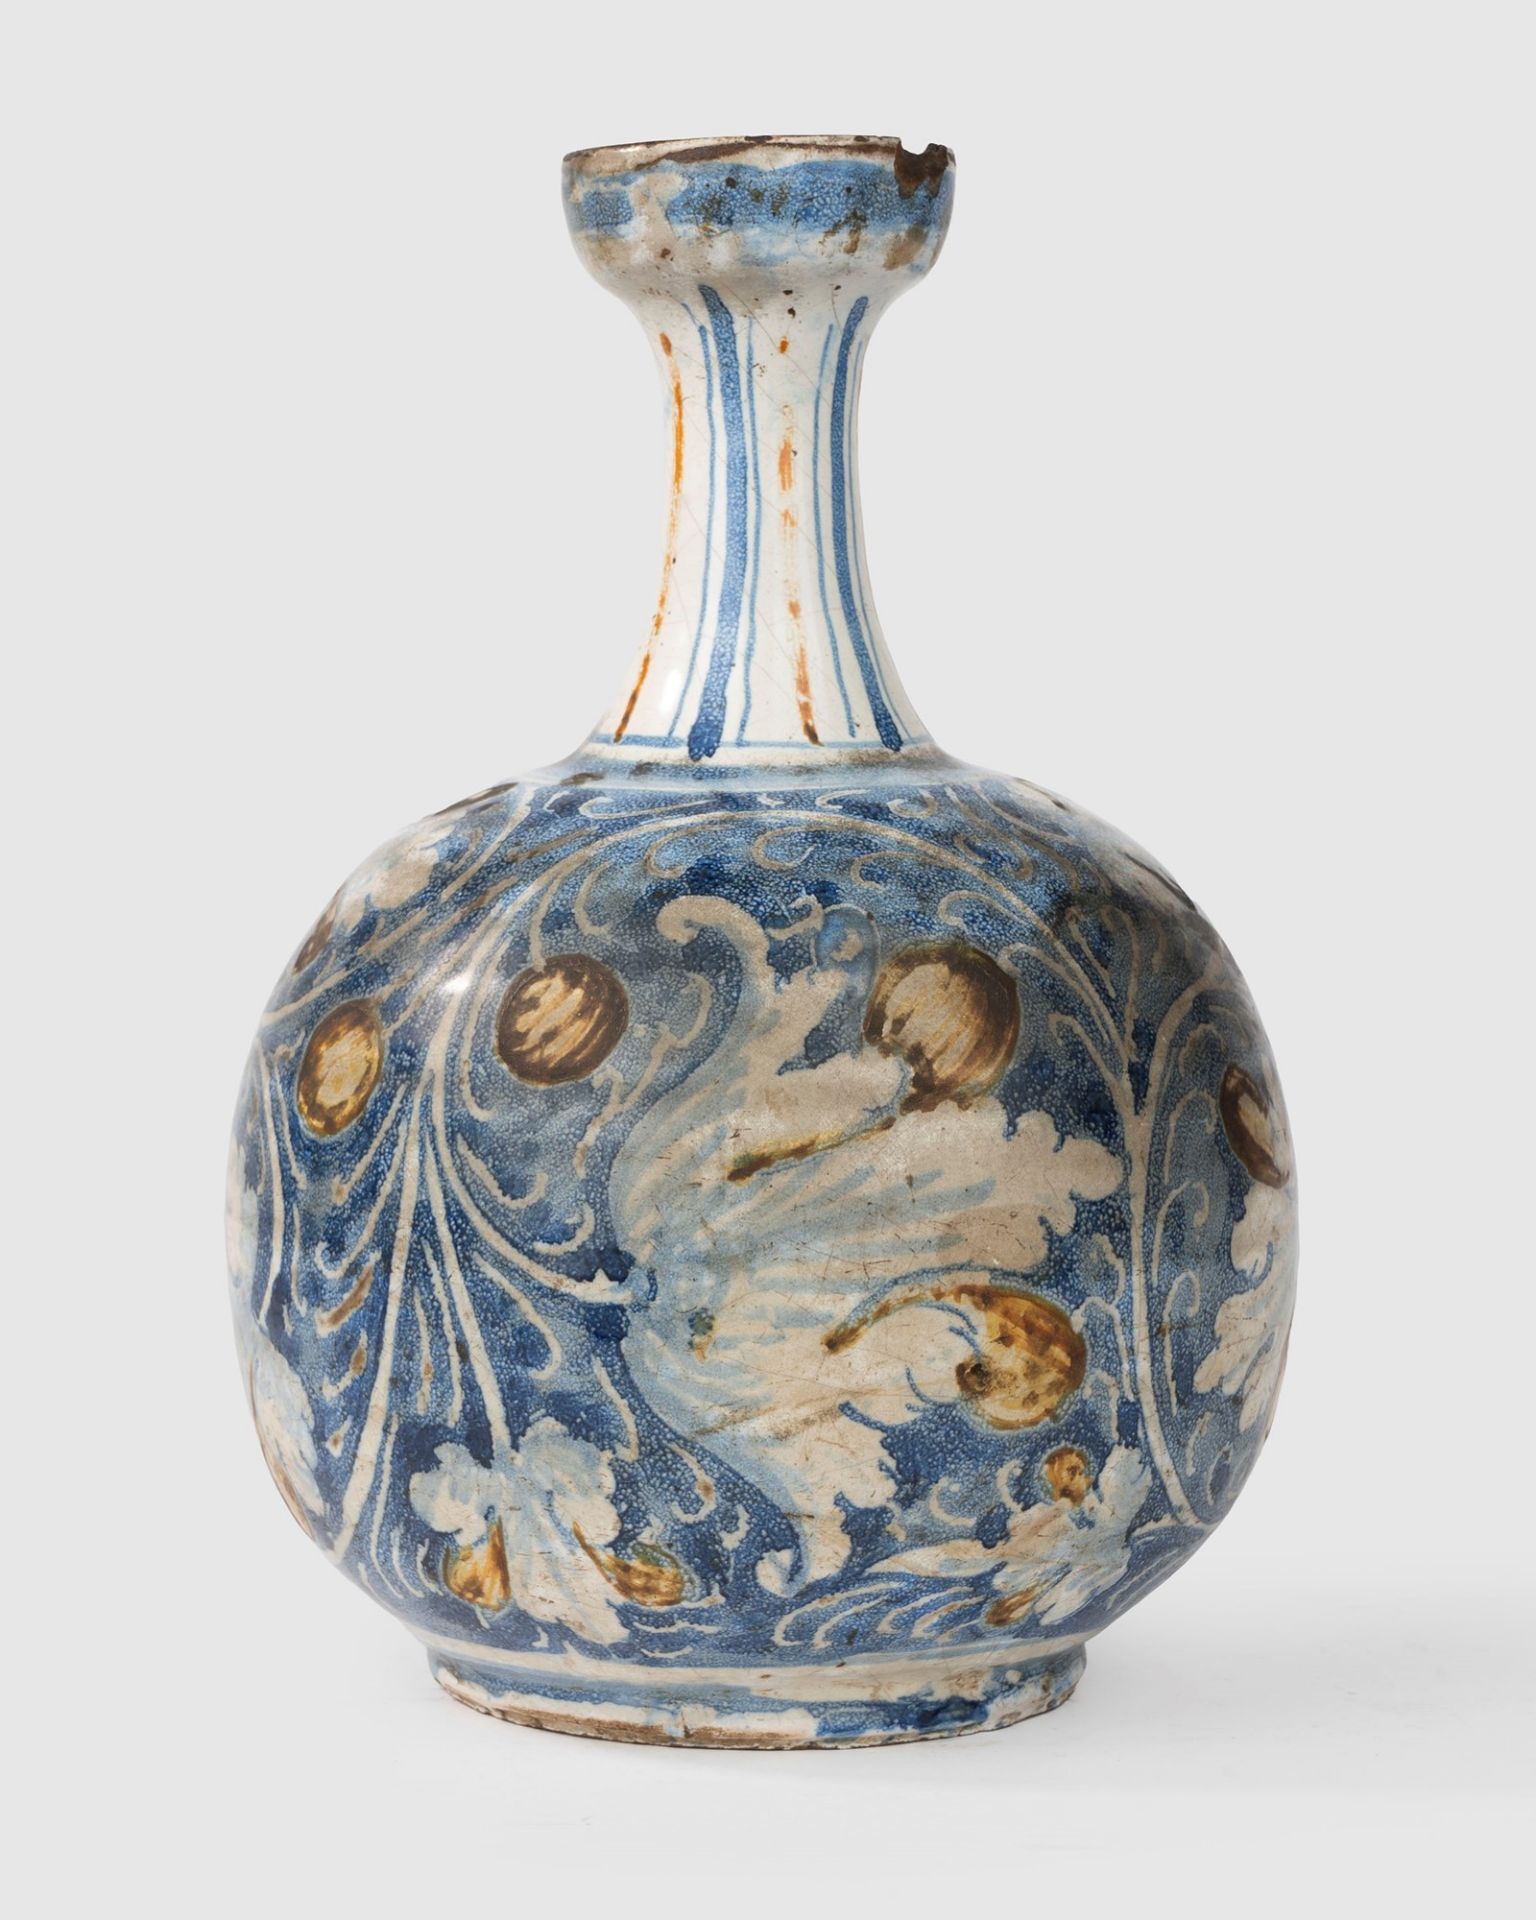 Polychrome majolica bottle, Caltagirone, 17th century - Image 2 of 5